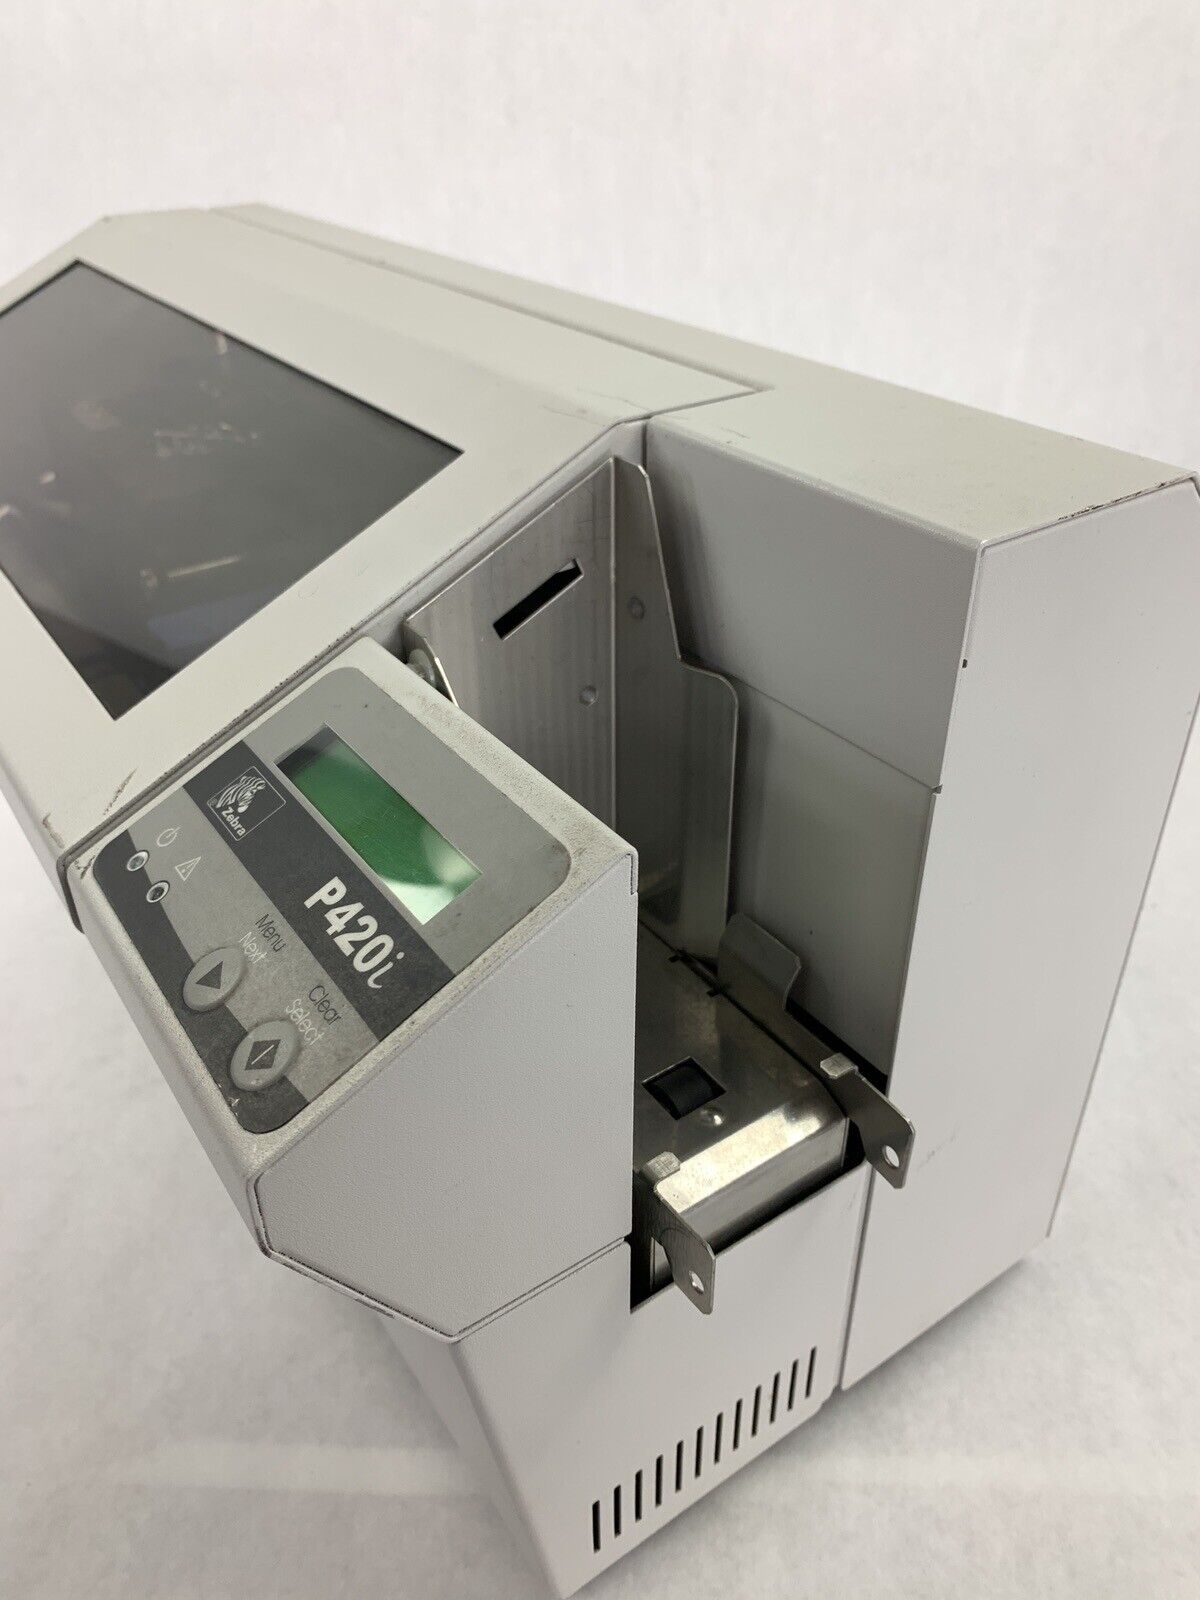 Zebra Eltron P420i Color Duplex 300dpi ID Card Printer USB Parallel For Parts